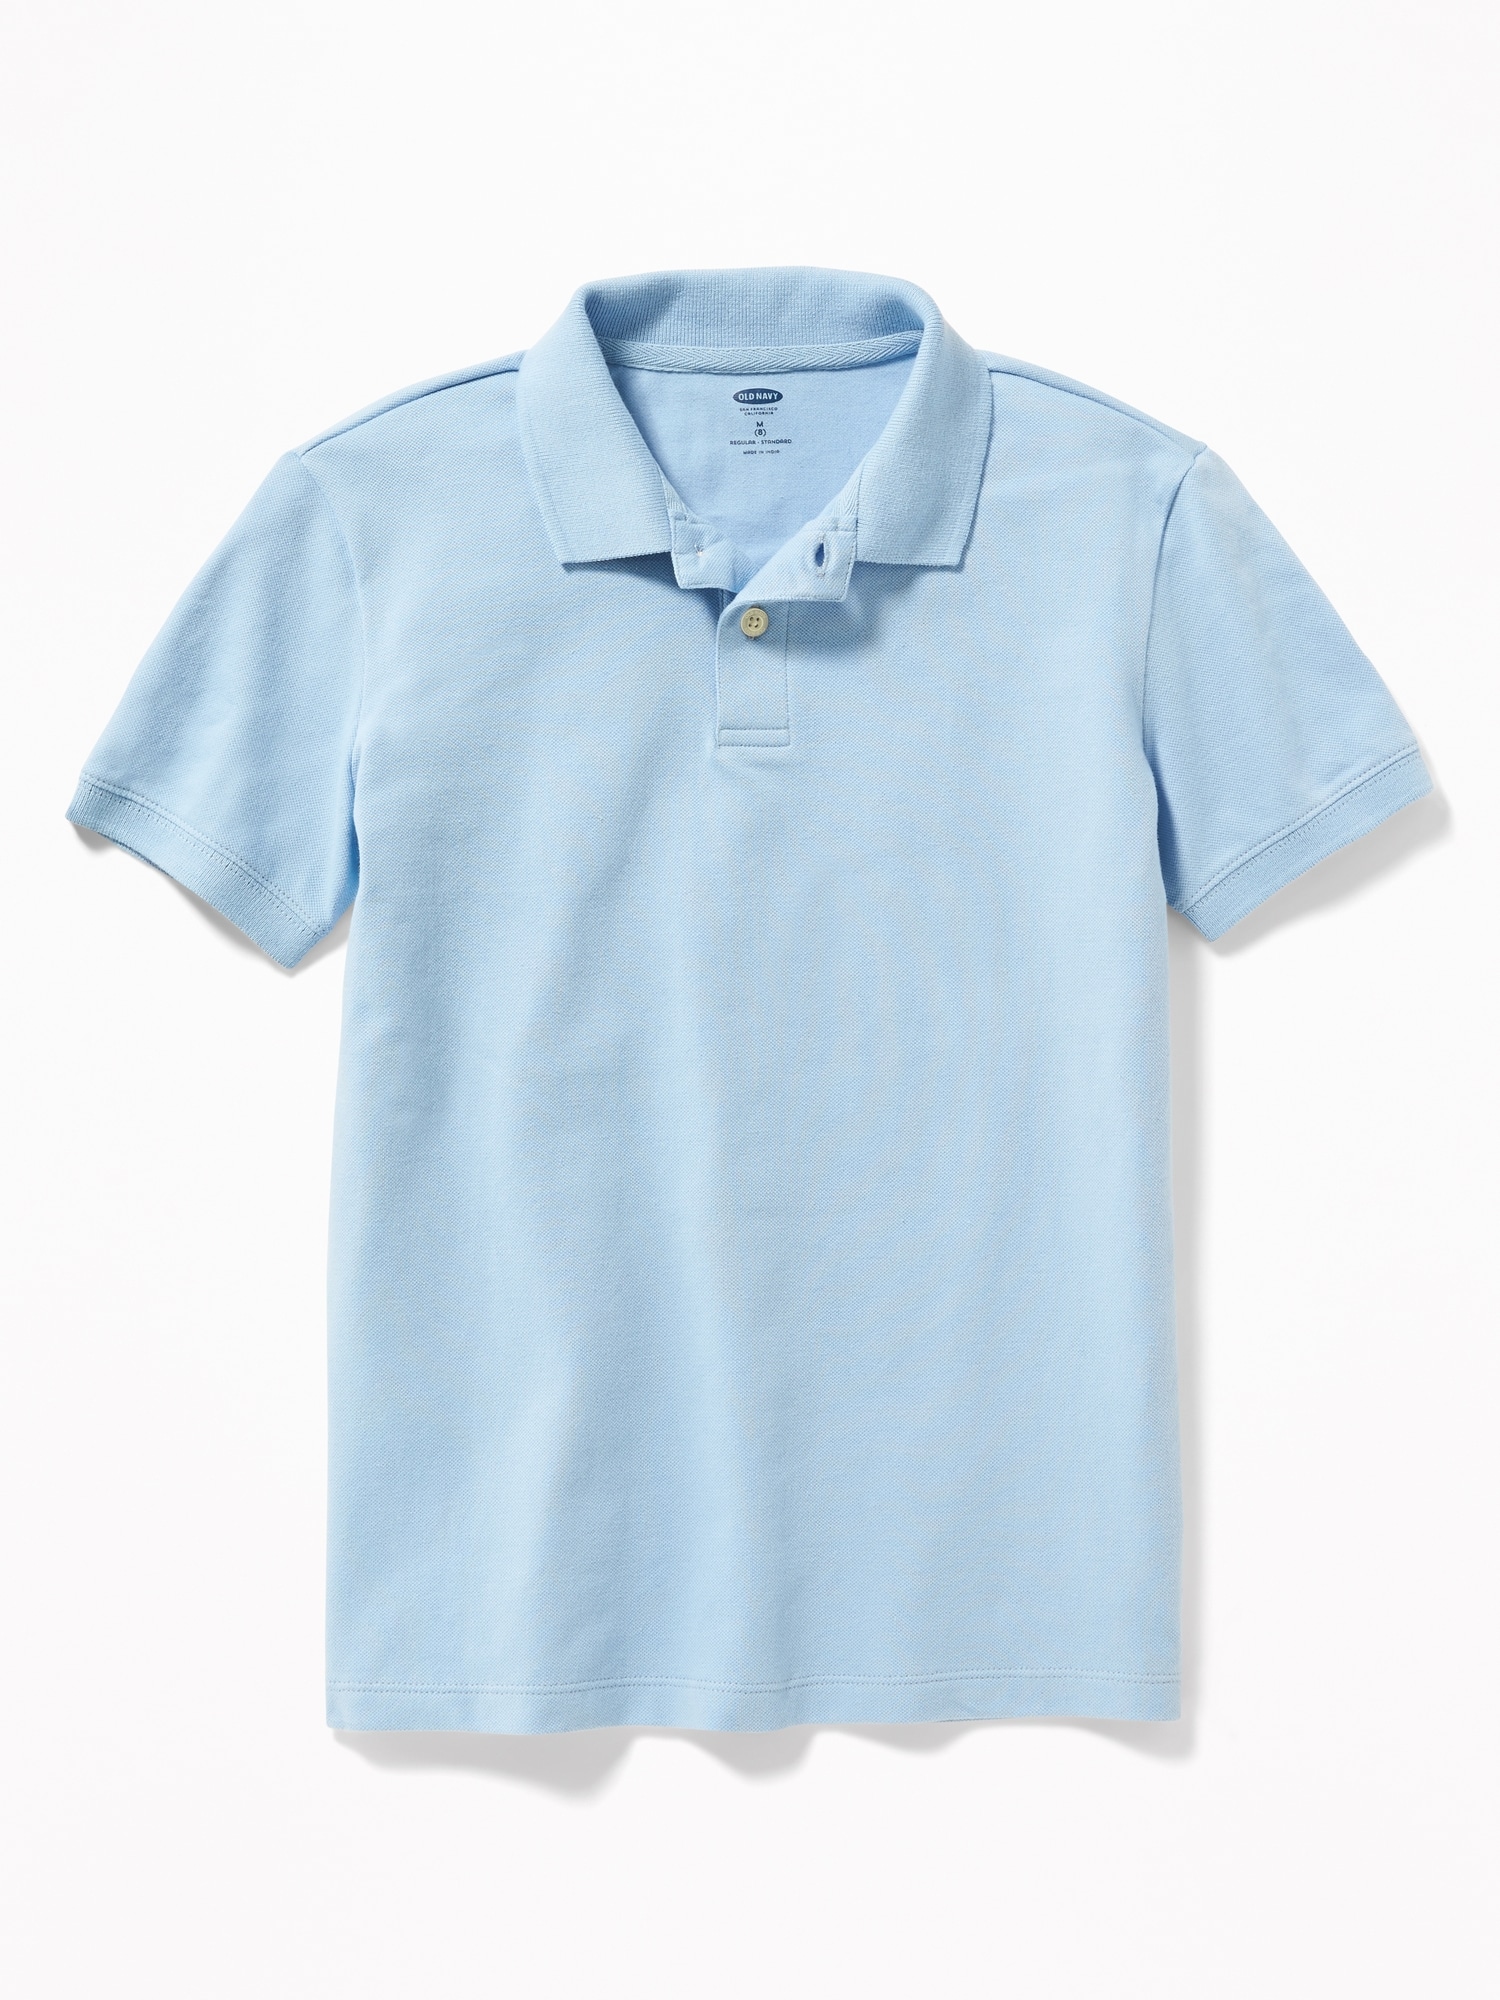 Old Navy Kids' School Uniform Pique Polo Shirt - - Size S